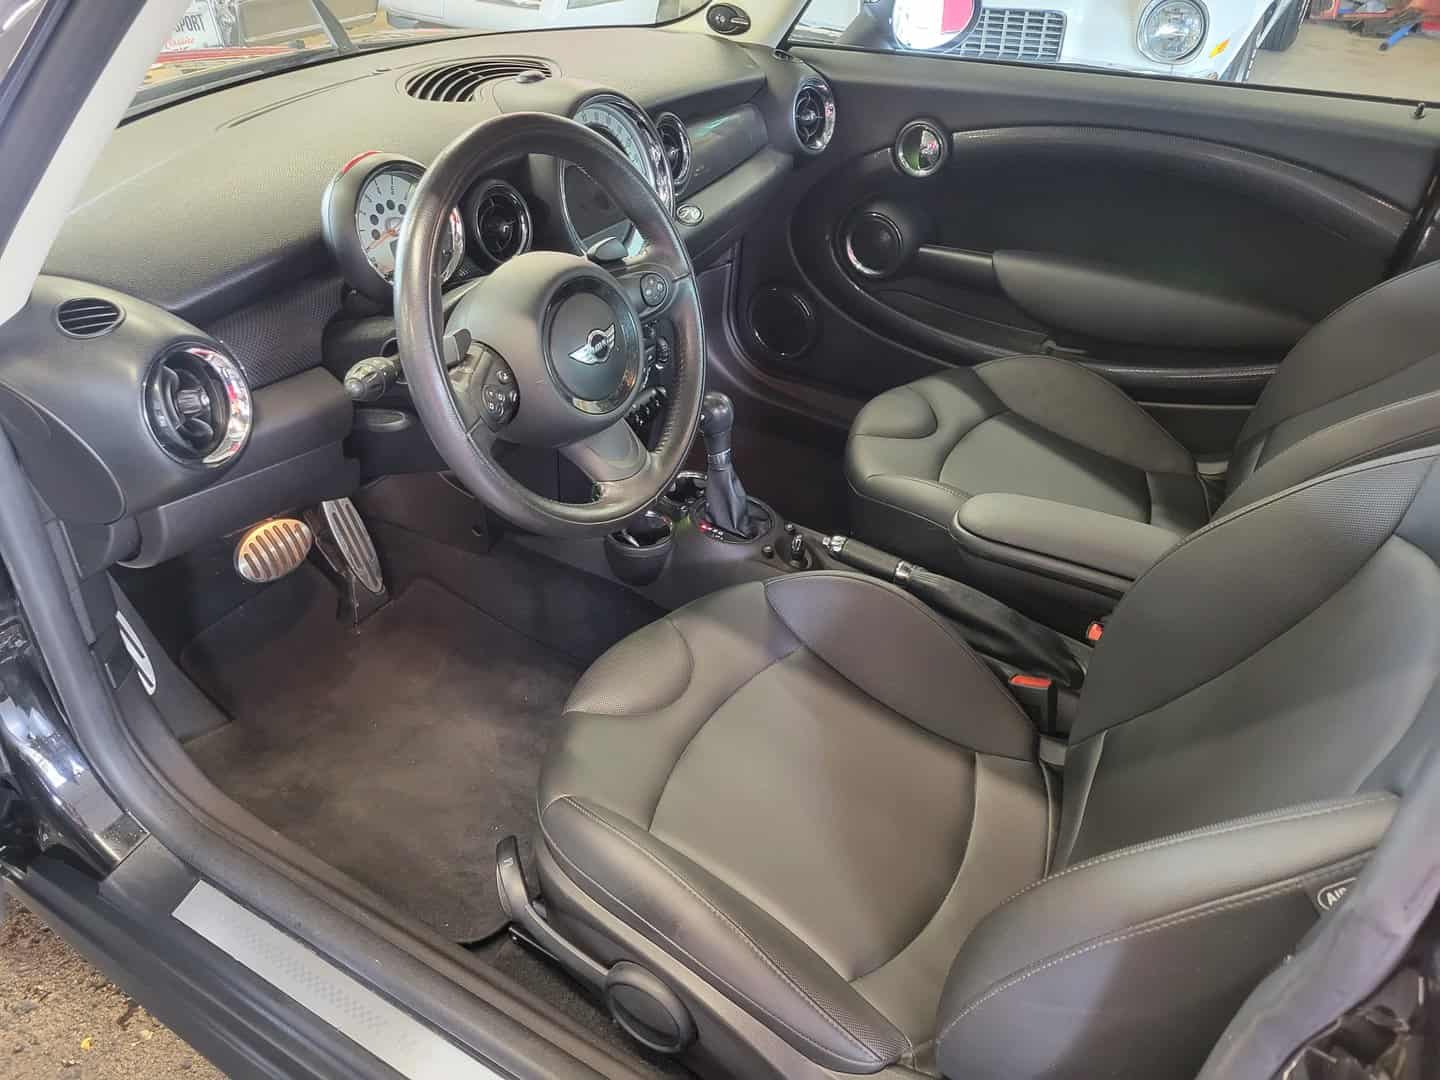 The 2013 Mini Cooper S boasts a stylish and sleek interior.